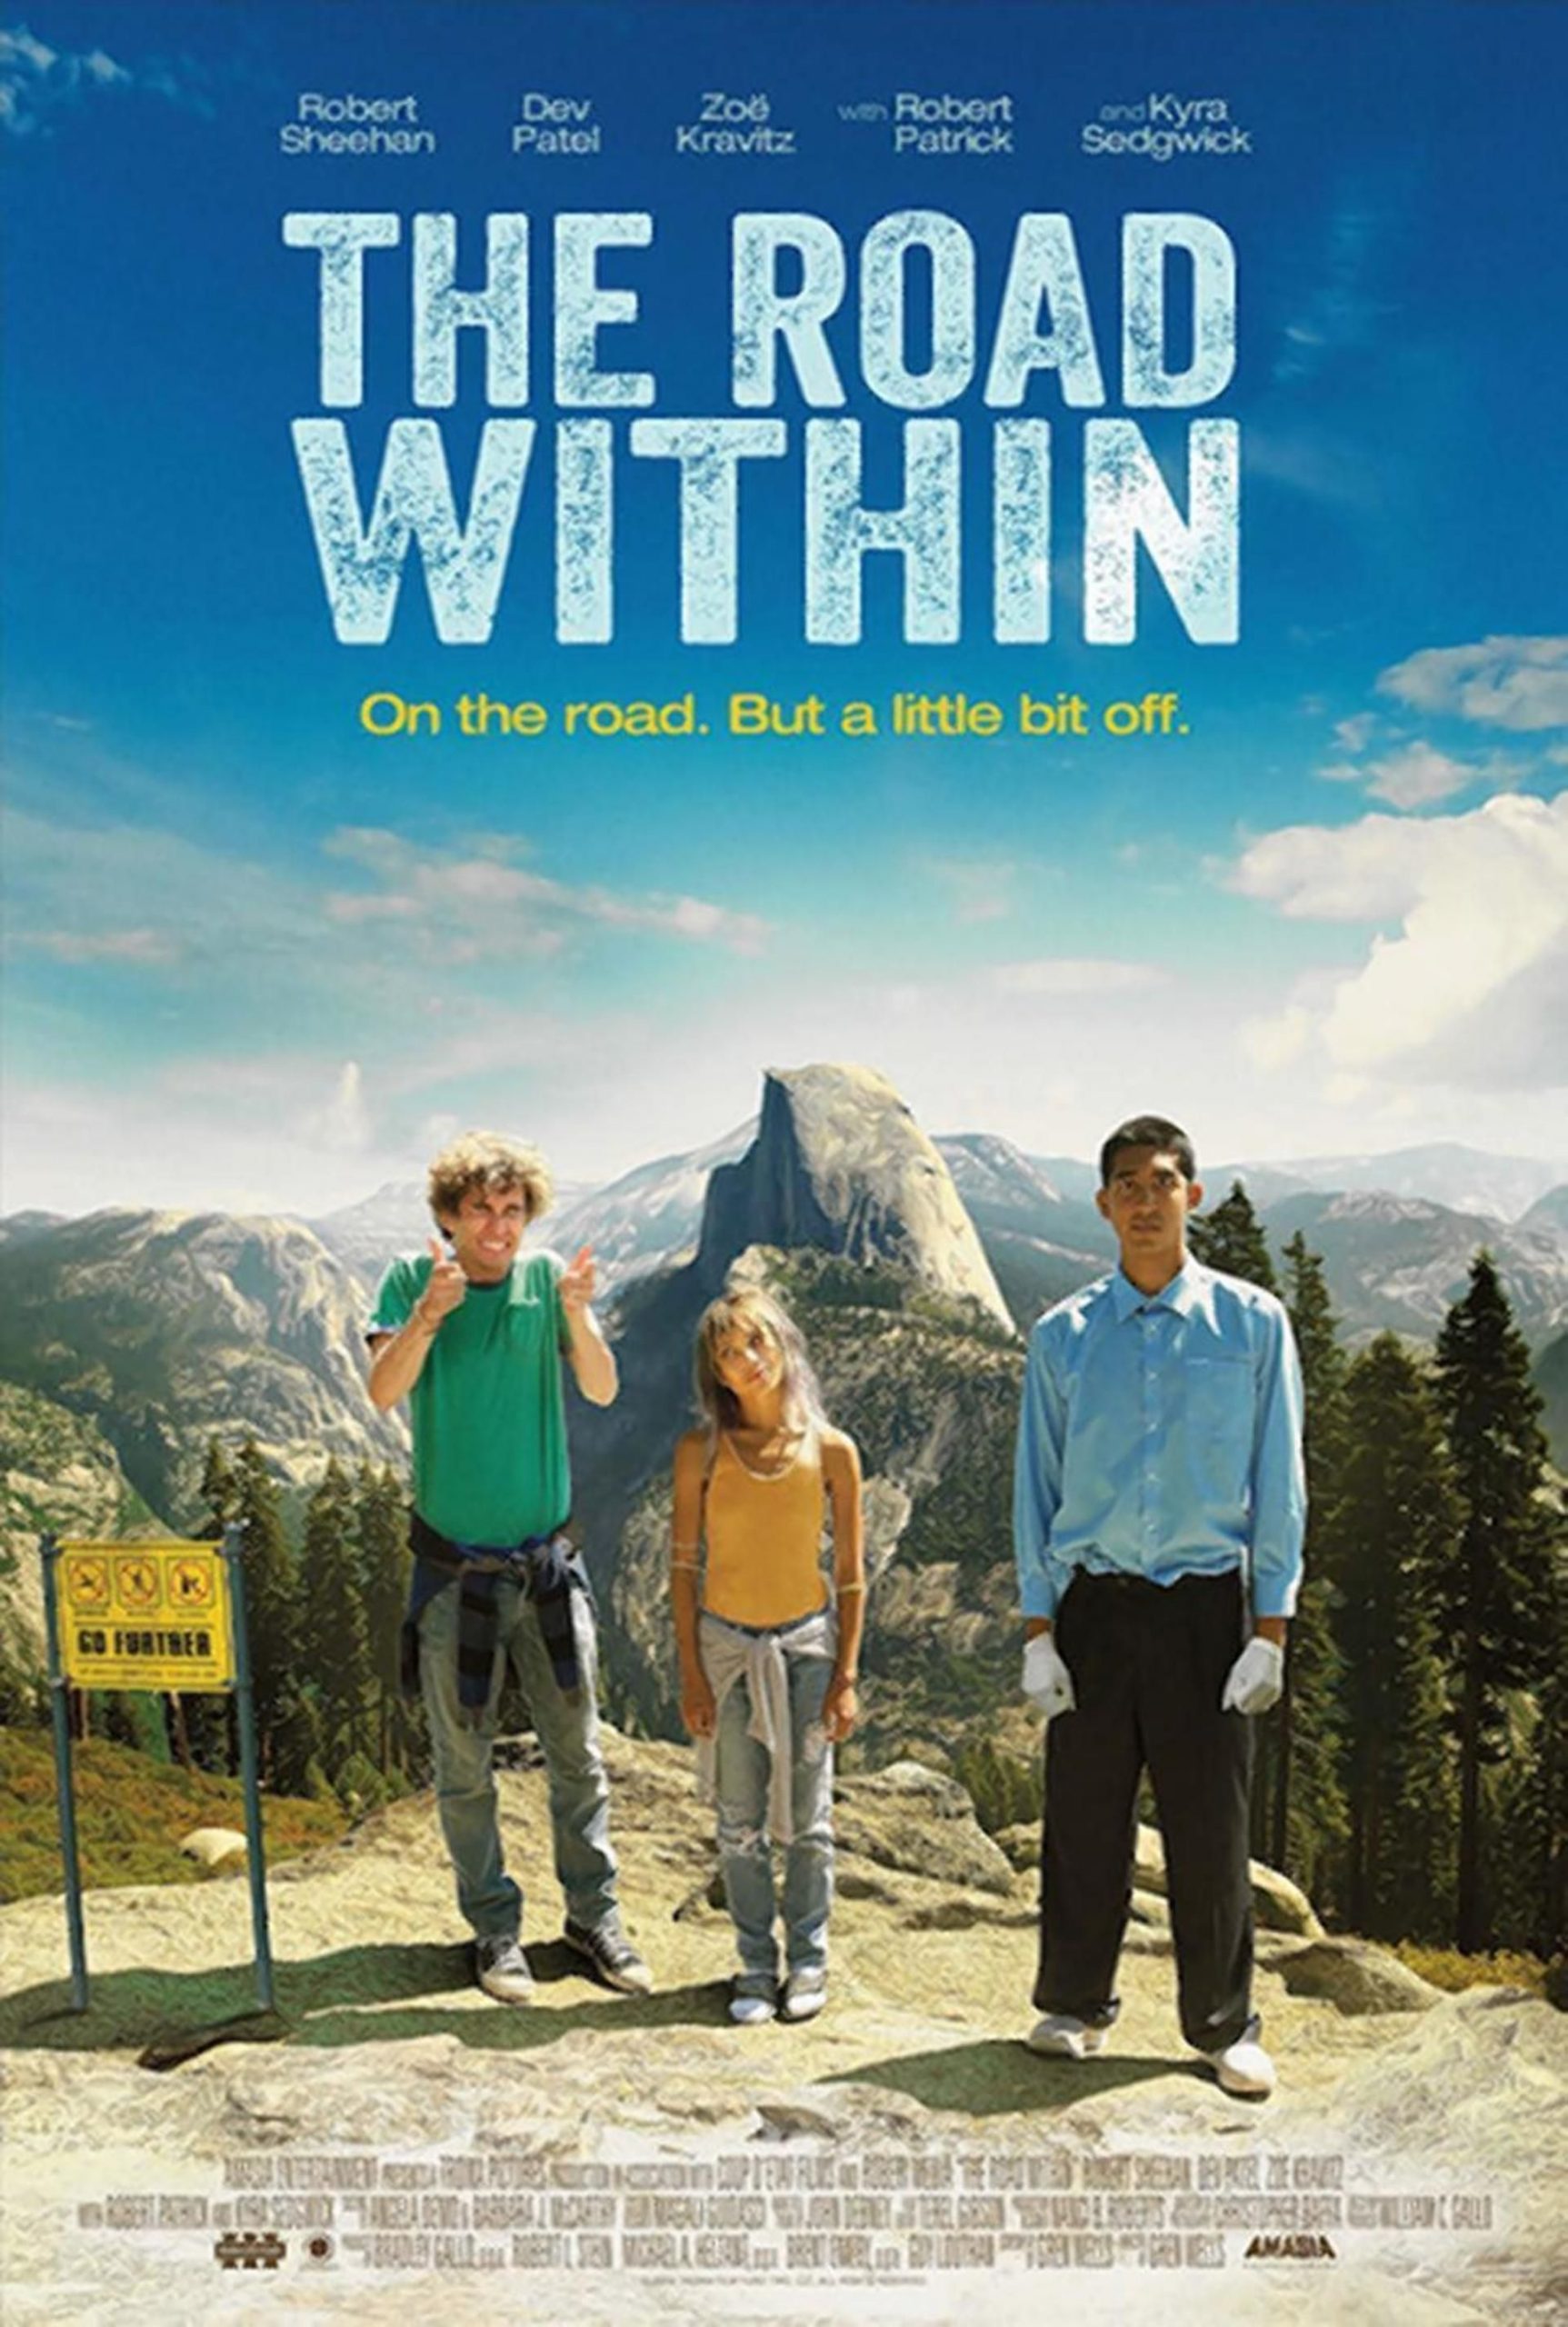 The Road Within (2014) ออกไปซ่าส์ให้สุดโลก